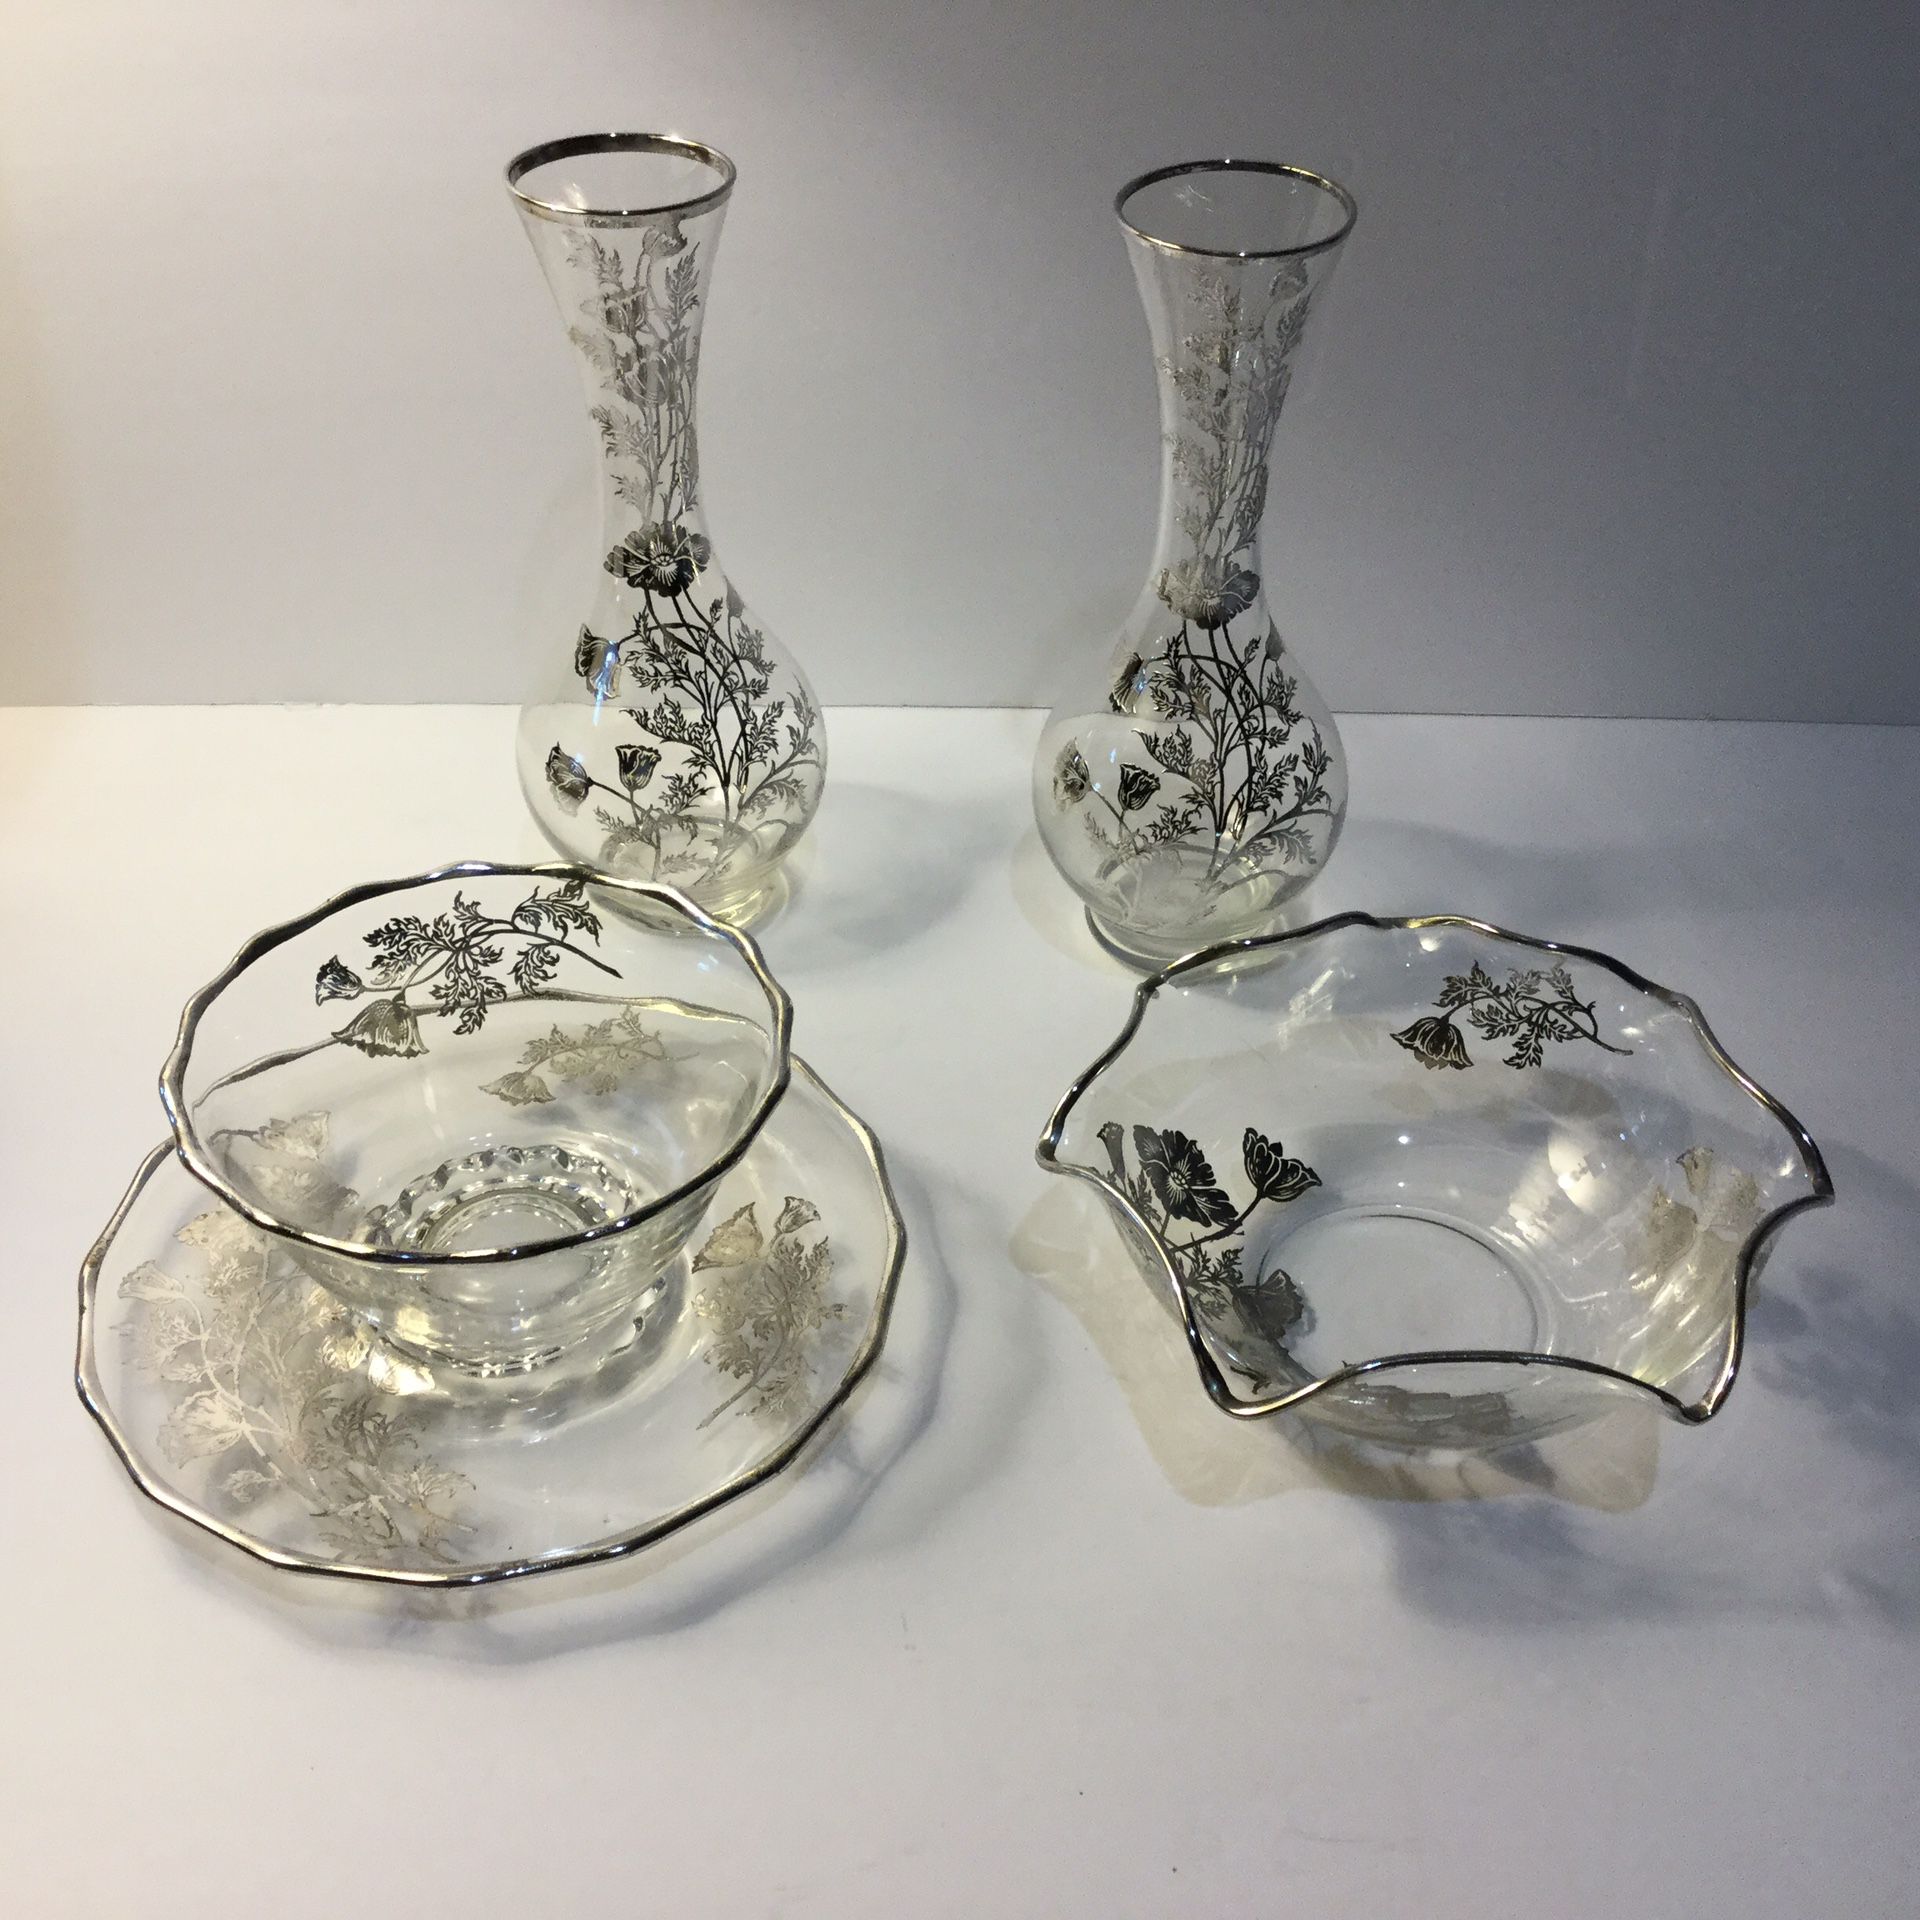 5 Pieces Of Vintage Silver Overlay Glassware